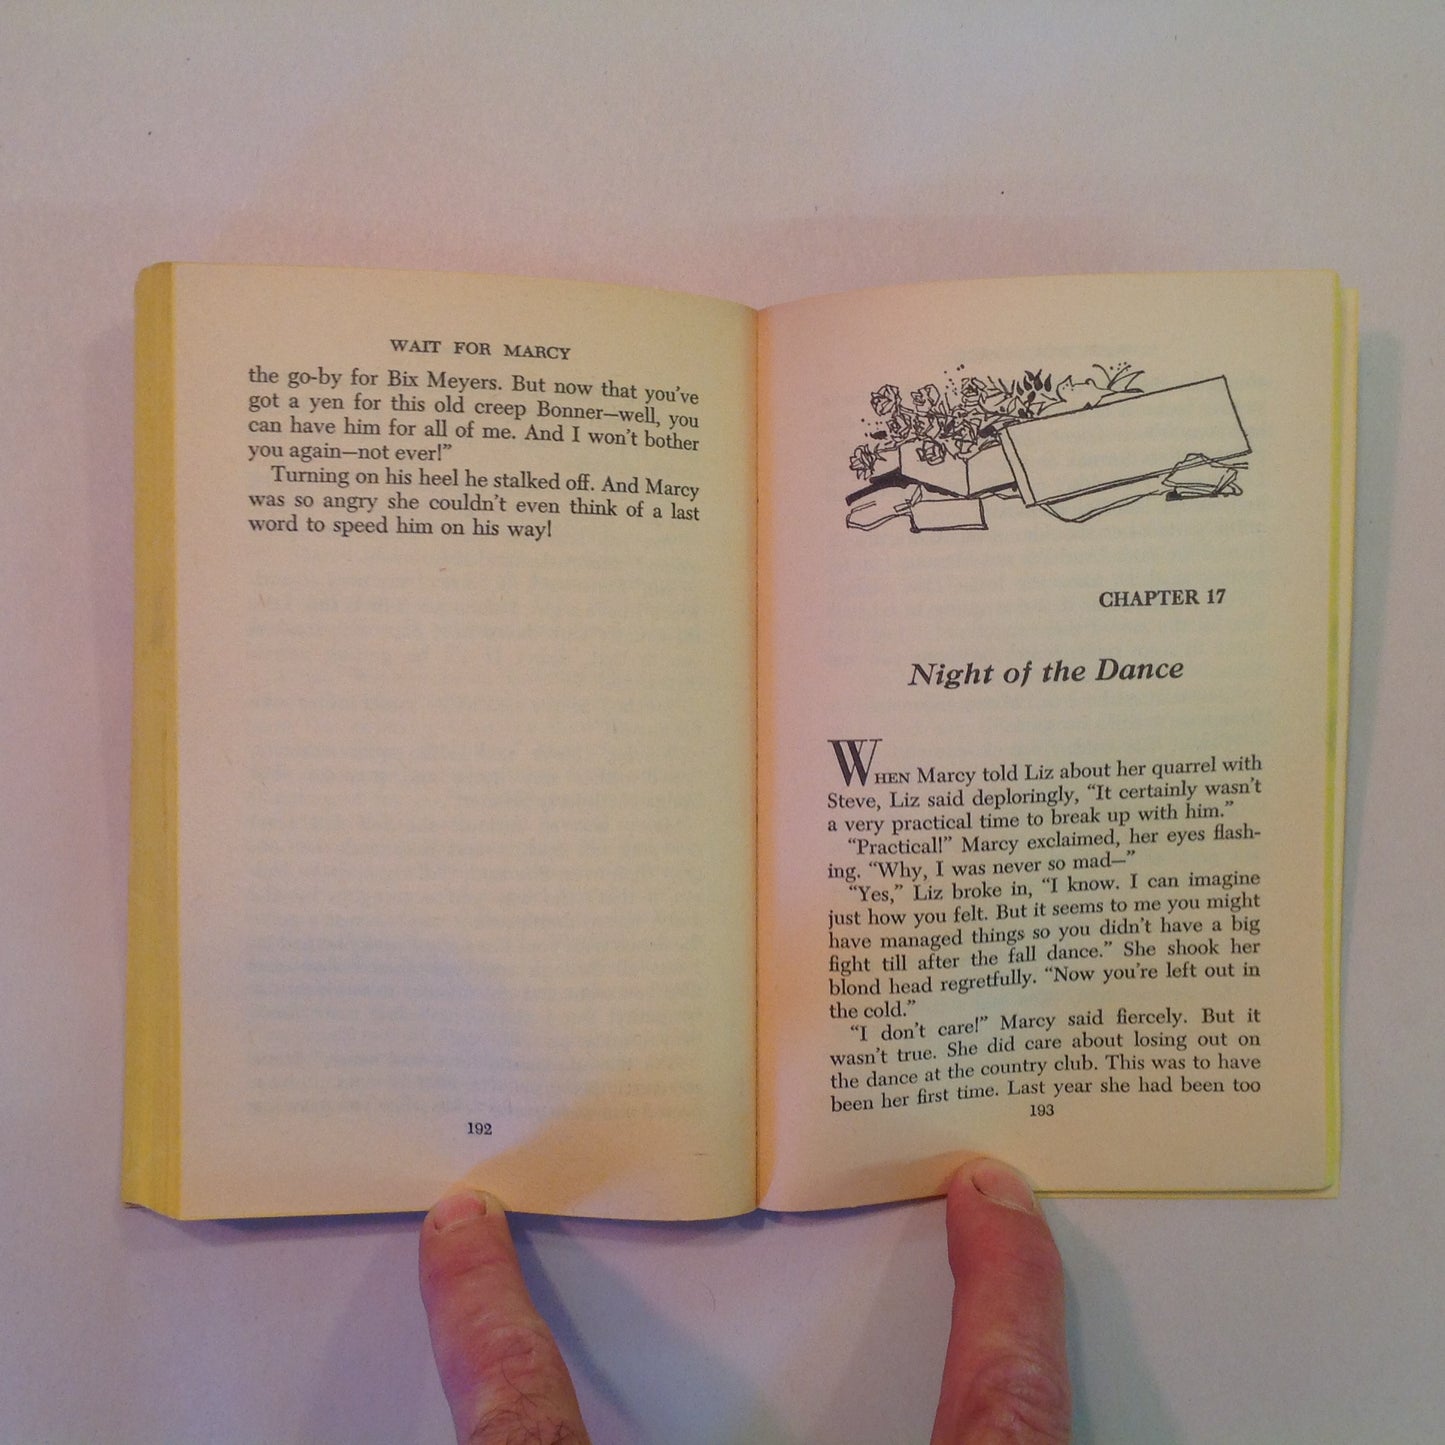 Vintage 1965 Scholastic Mass Market Paperback Wait for Marcy Rosamond du Jardin